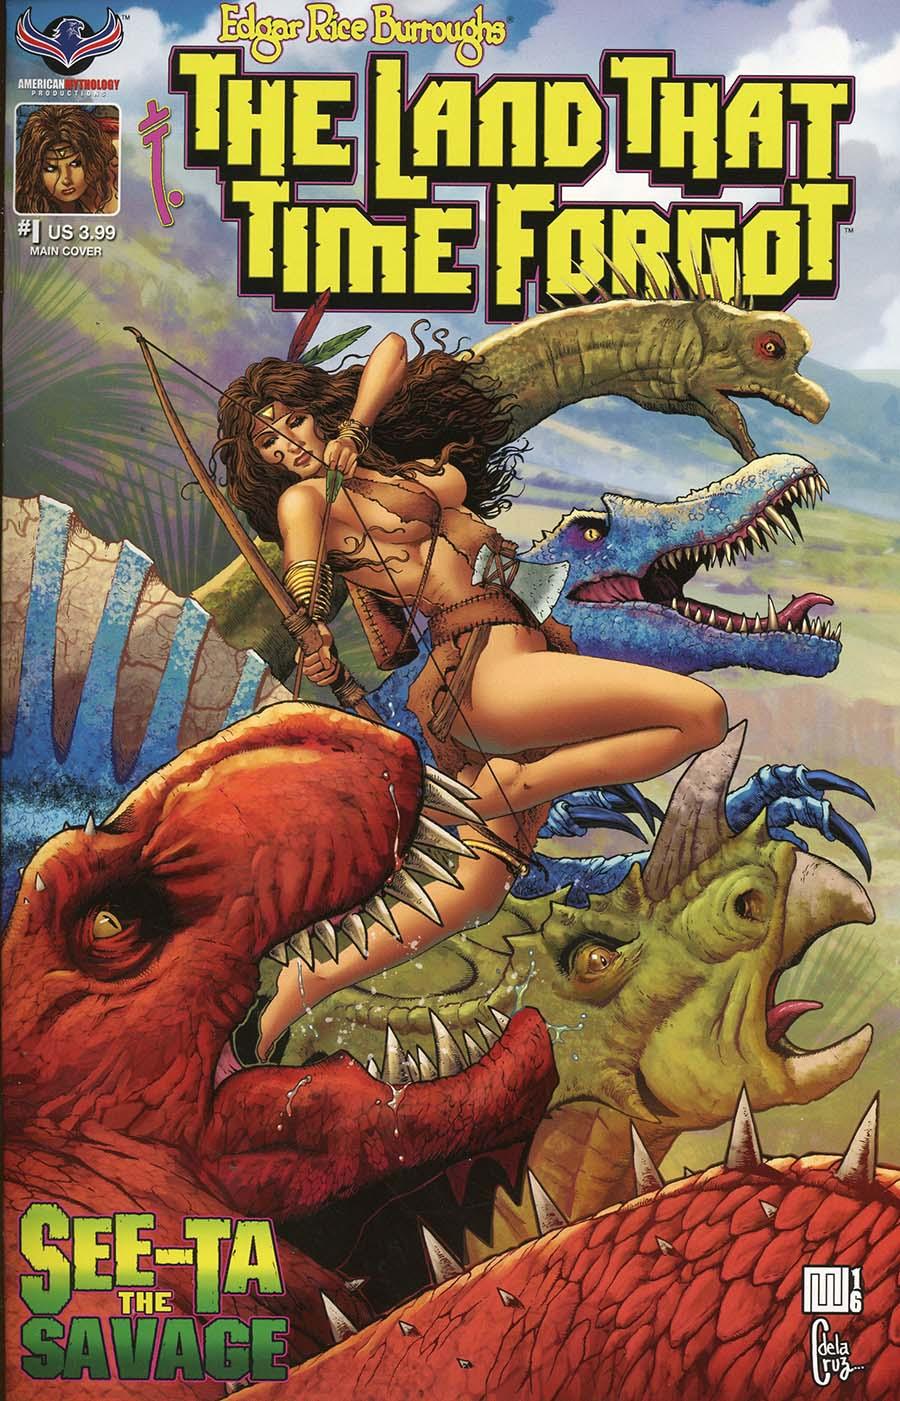 Edgar Rice Burroughs Land That Time Forgot See-Ta The Savage Vol. 1 #1